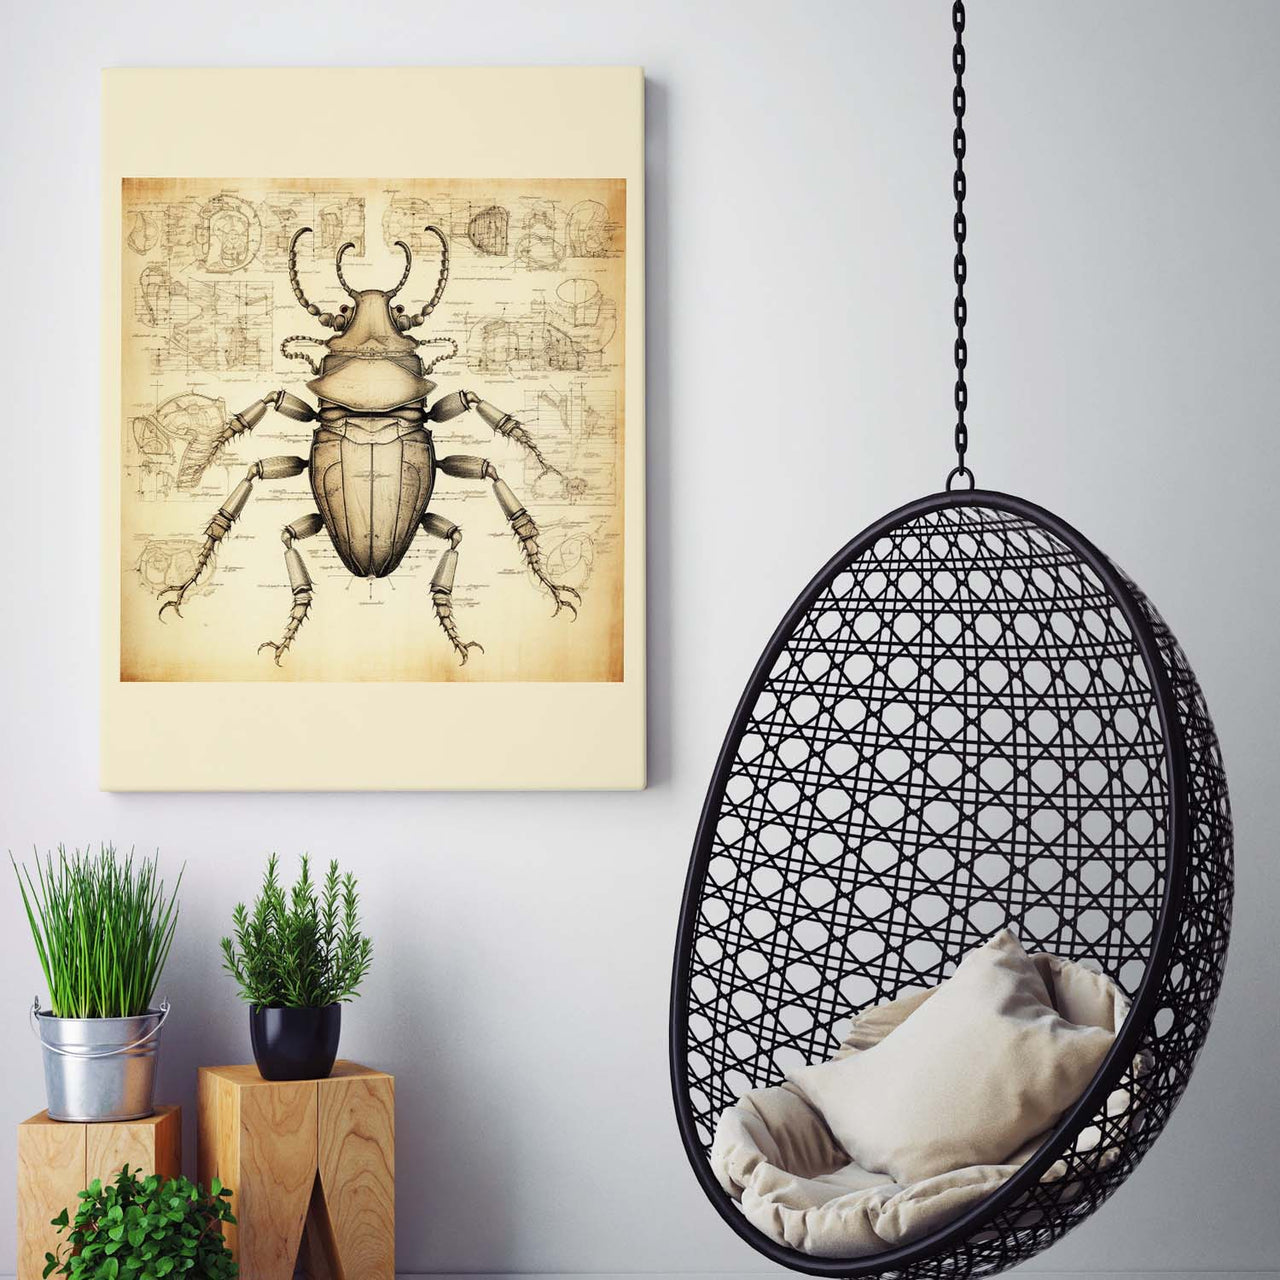 Drawings Beetle Da Vinci Style Vintage Framed Canvas Prints Wall Art Hanging Home Decor